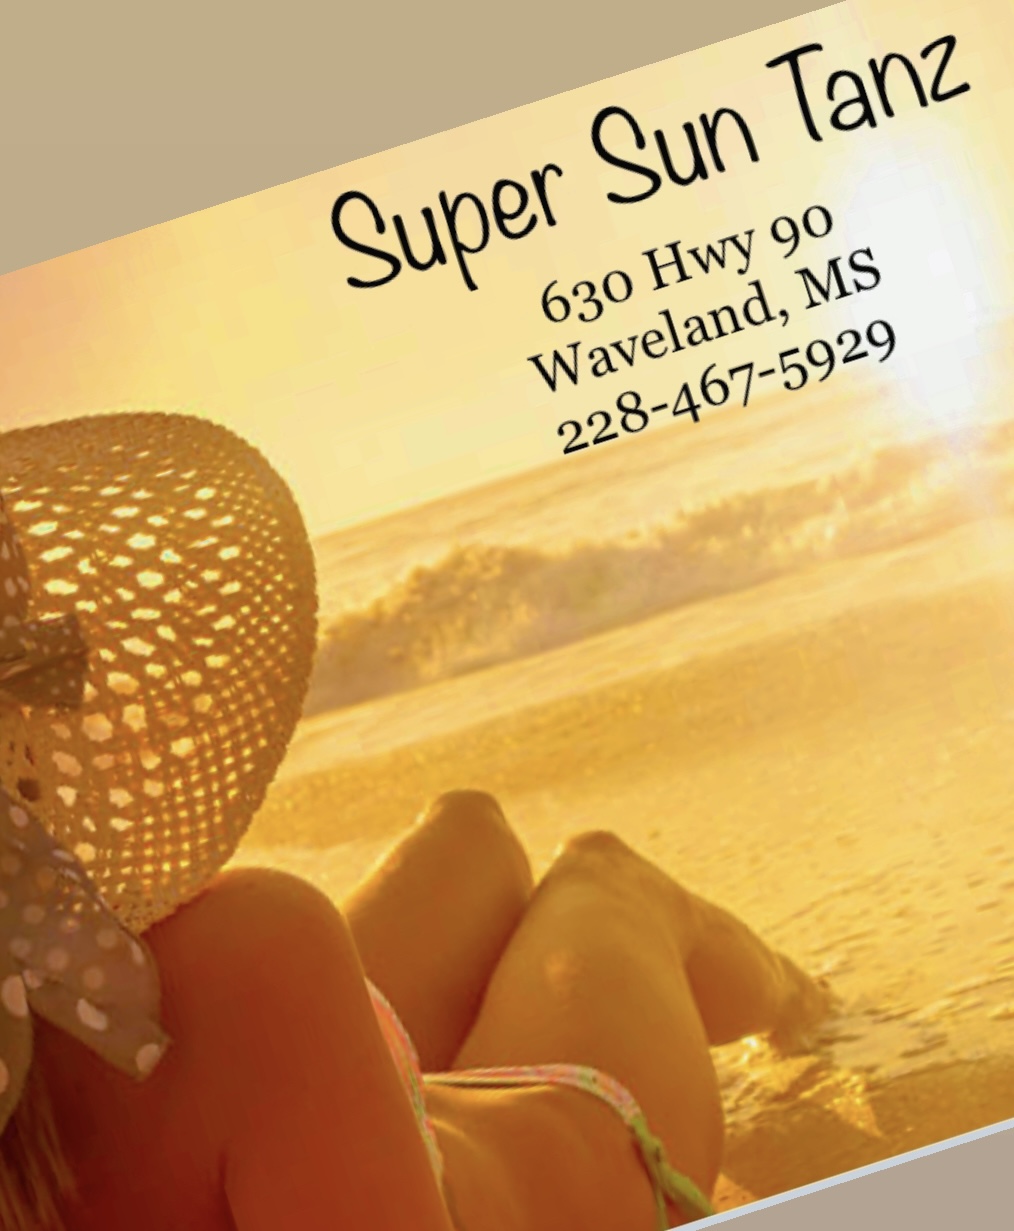 Super Sun Tanz 630 US-90, Waveland Mississippi 39576